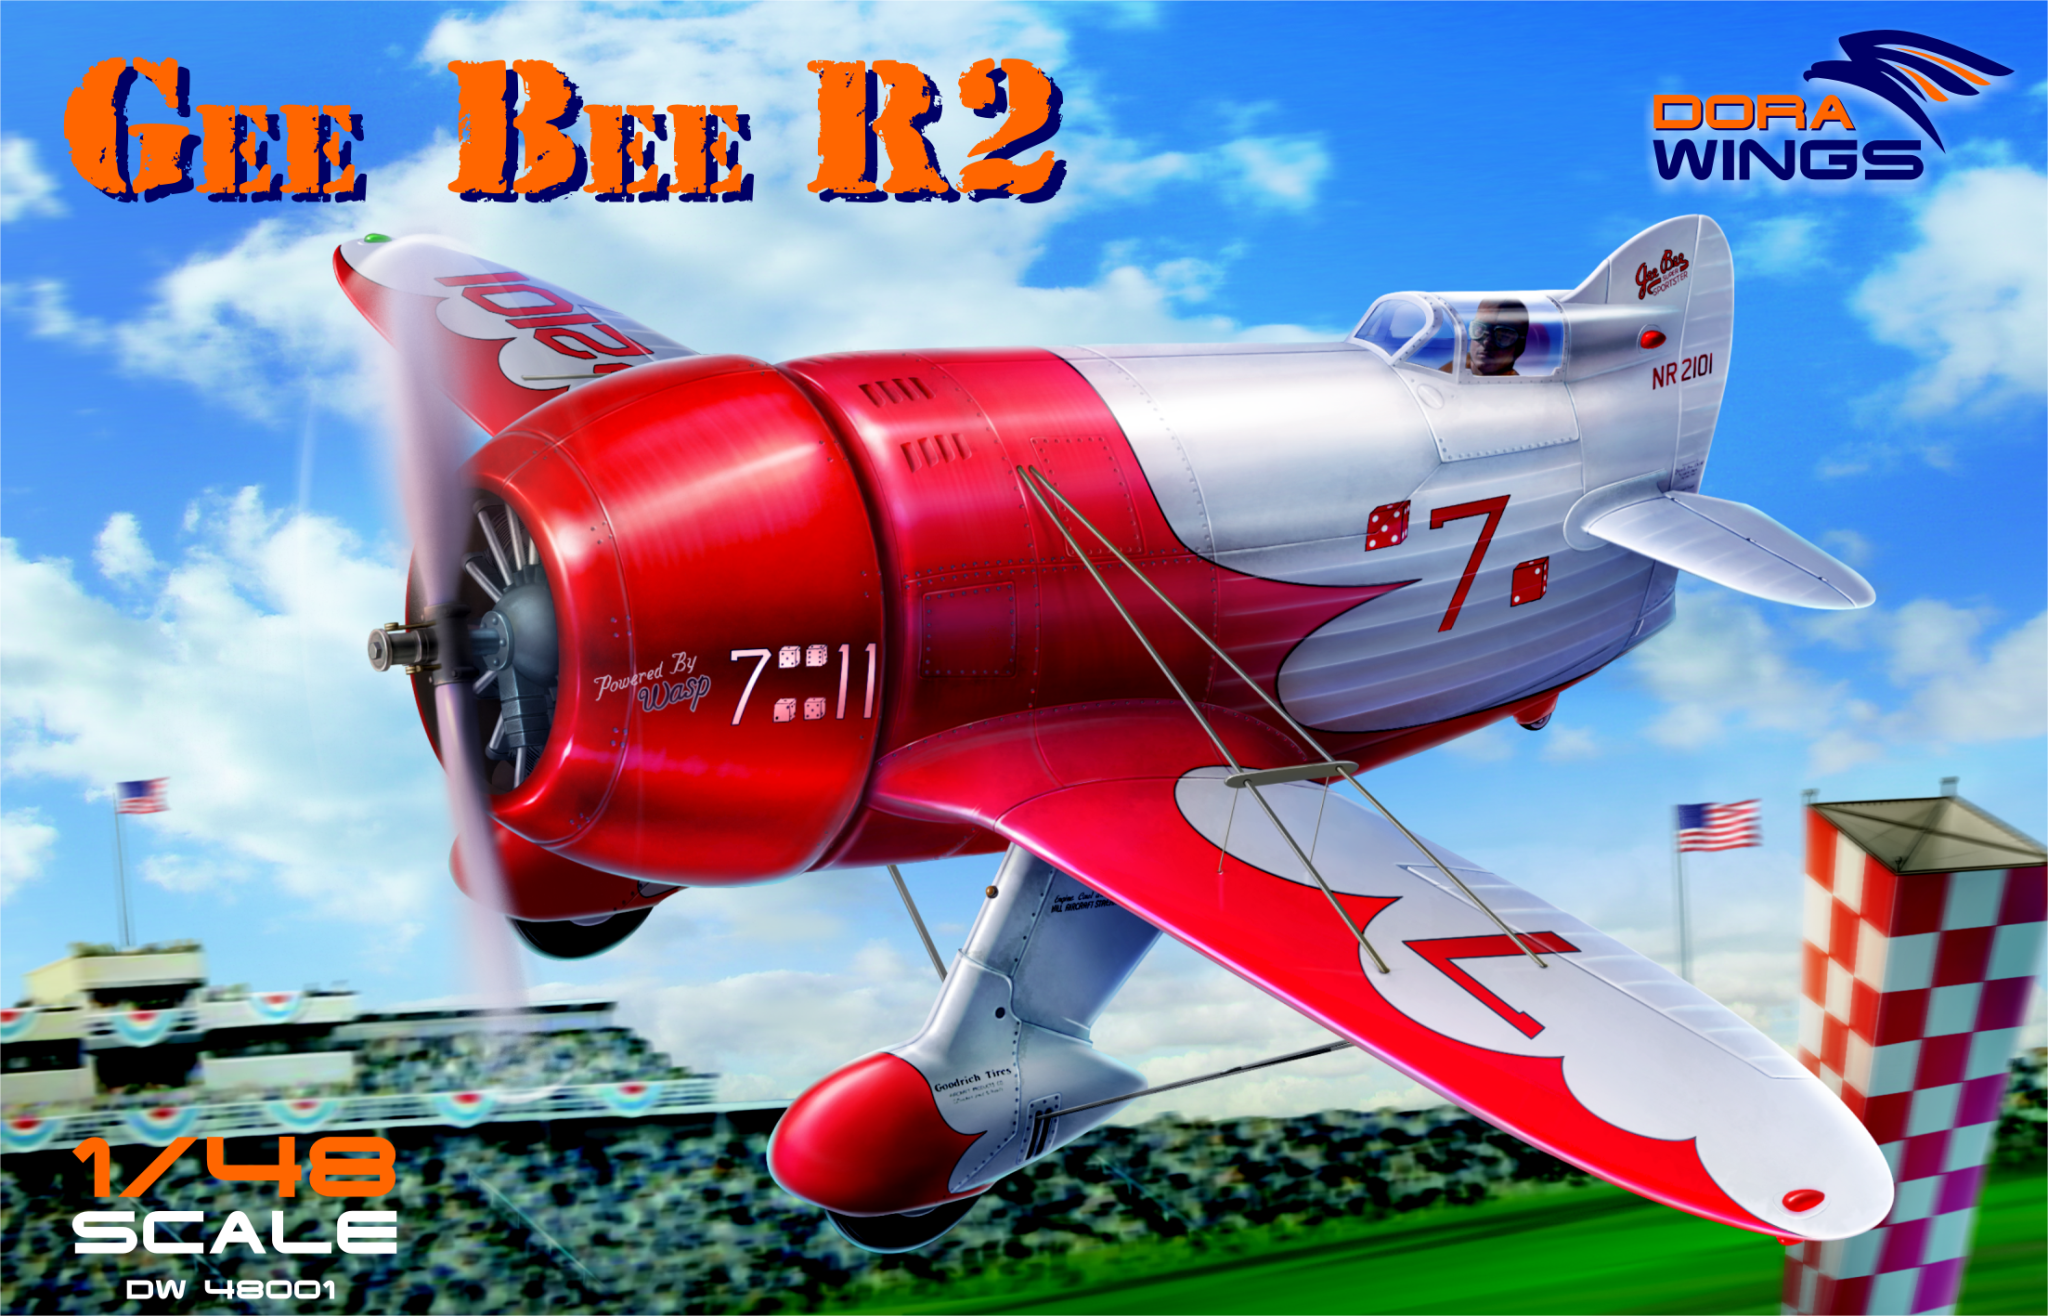 Gee Bee R2 1932 Super Sportster 1:48